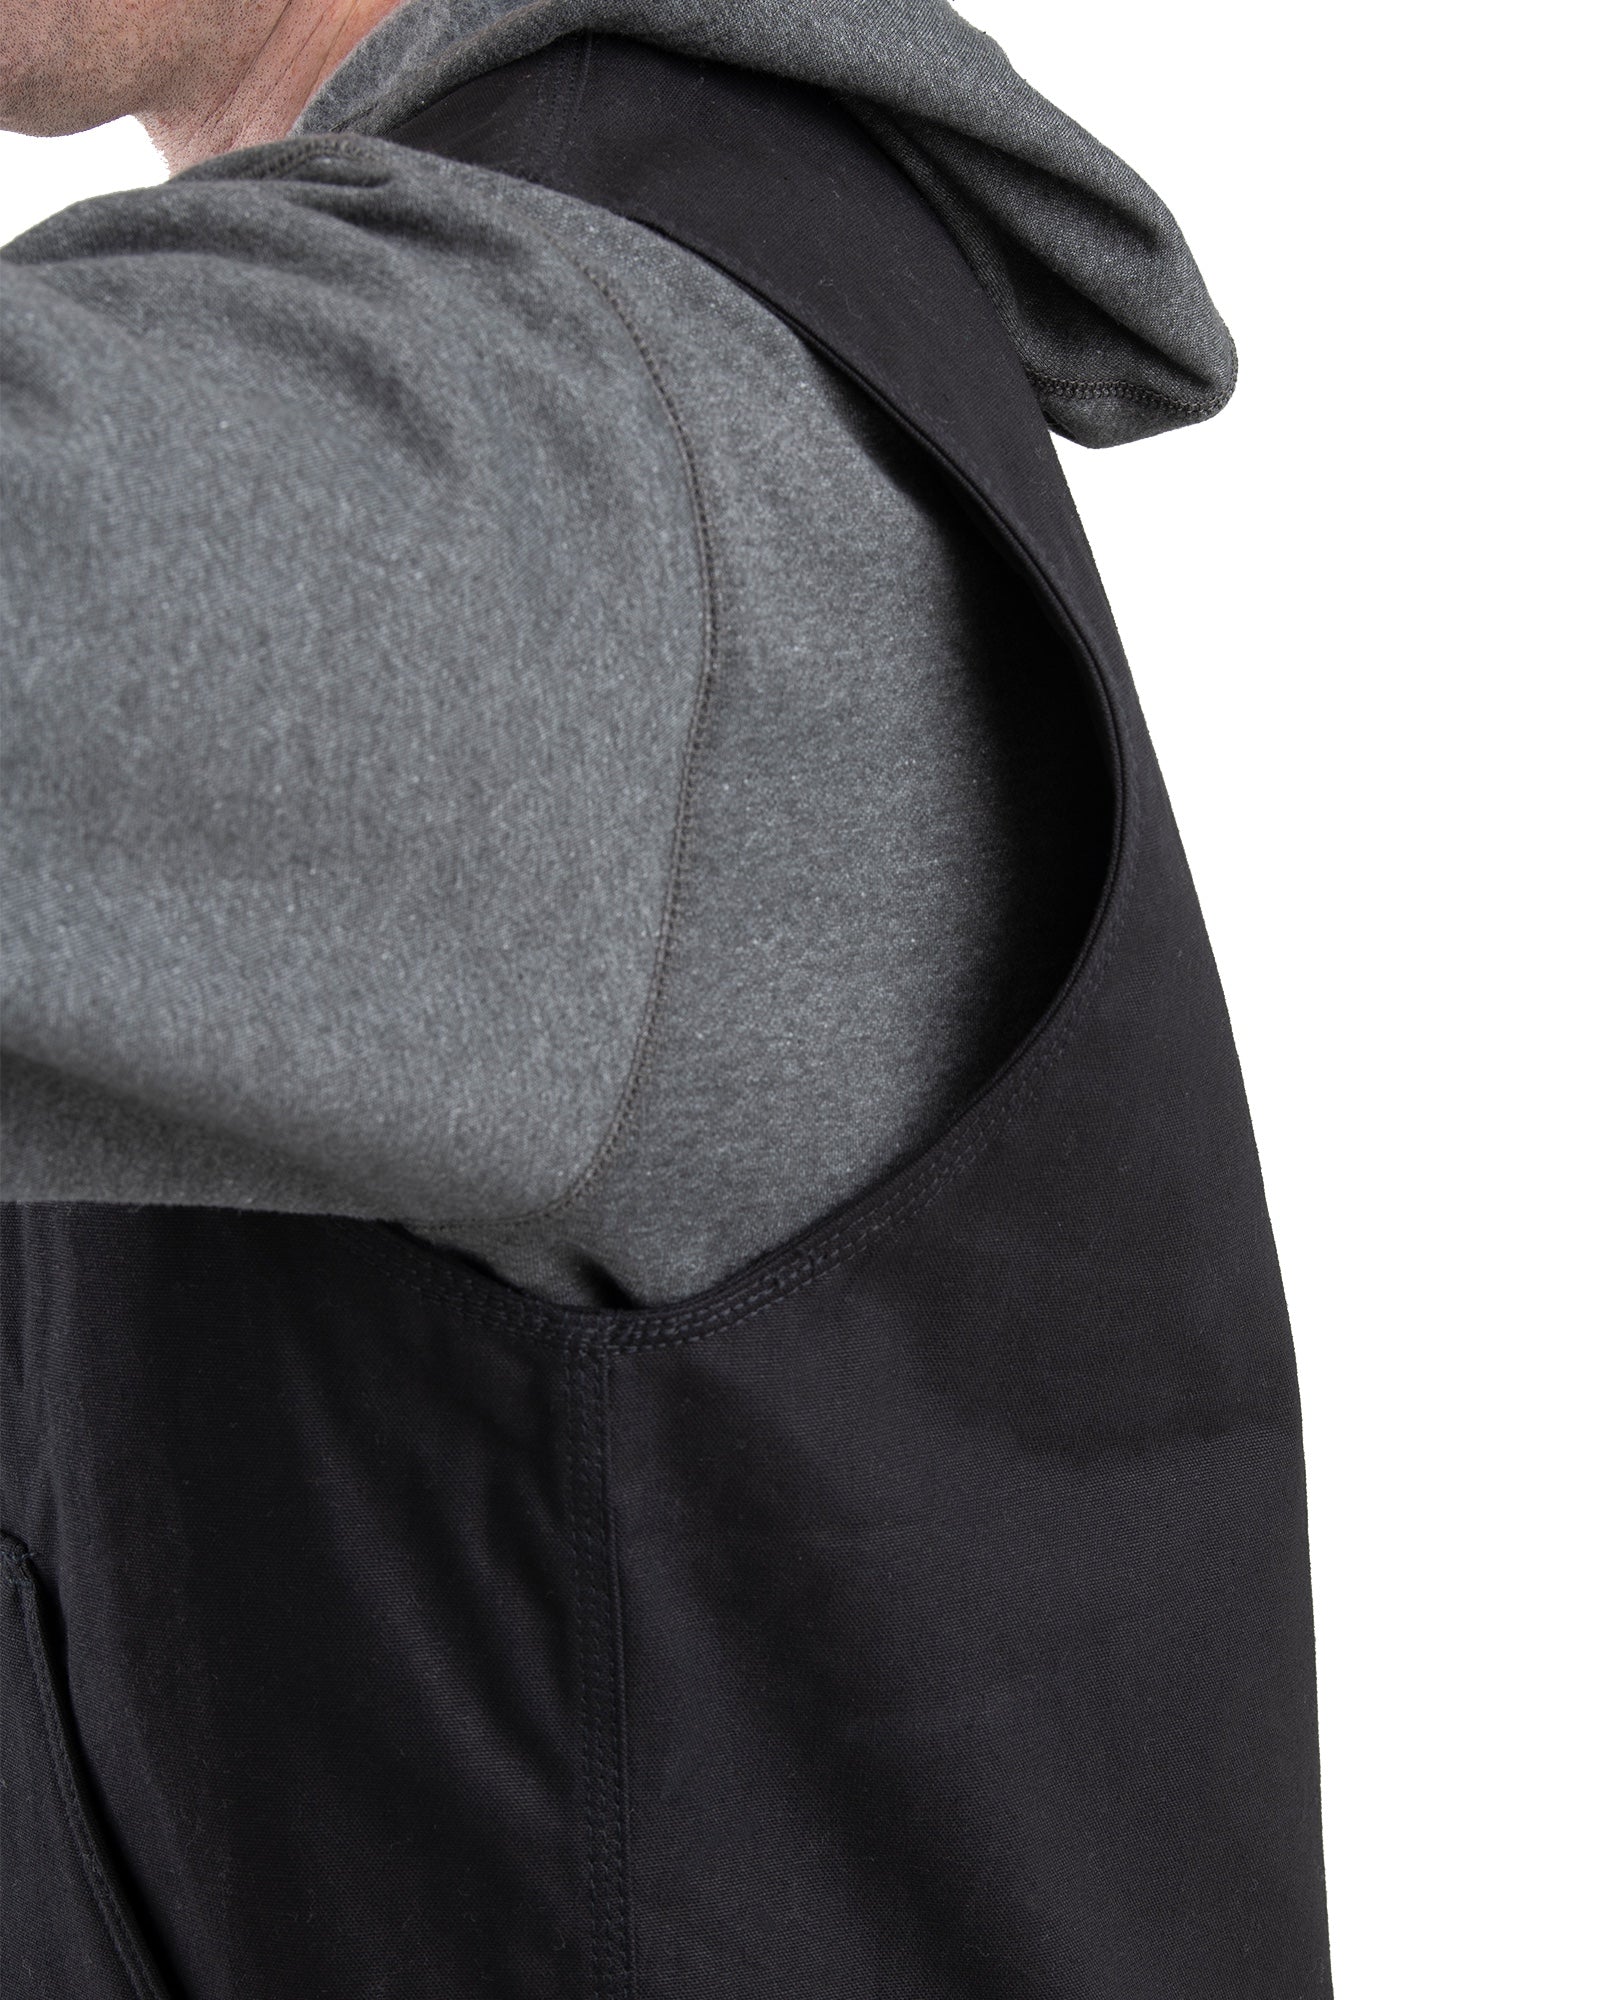 HARD LAND Men's Padded Puffer Vest Outdoor Water-Resistant Winter